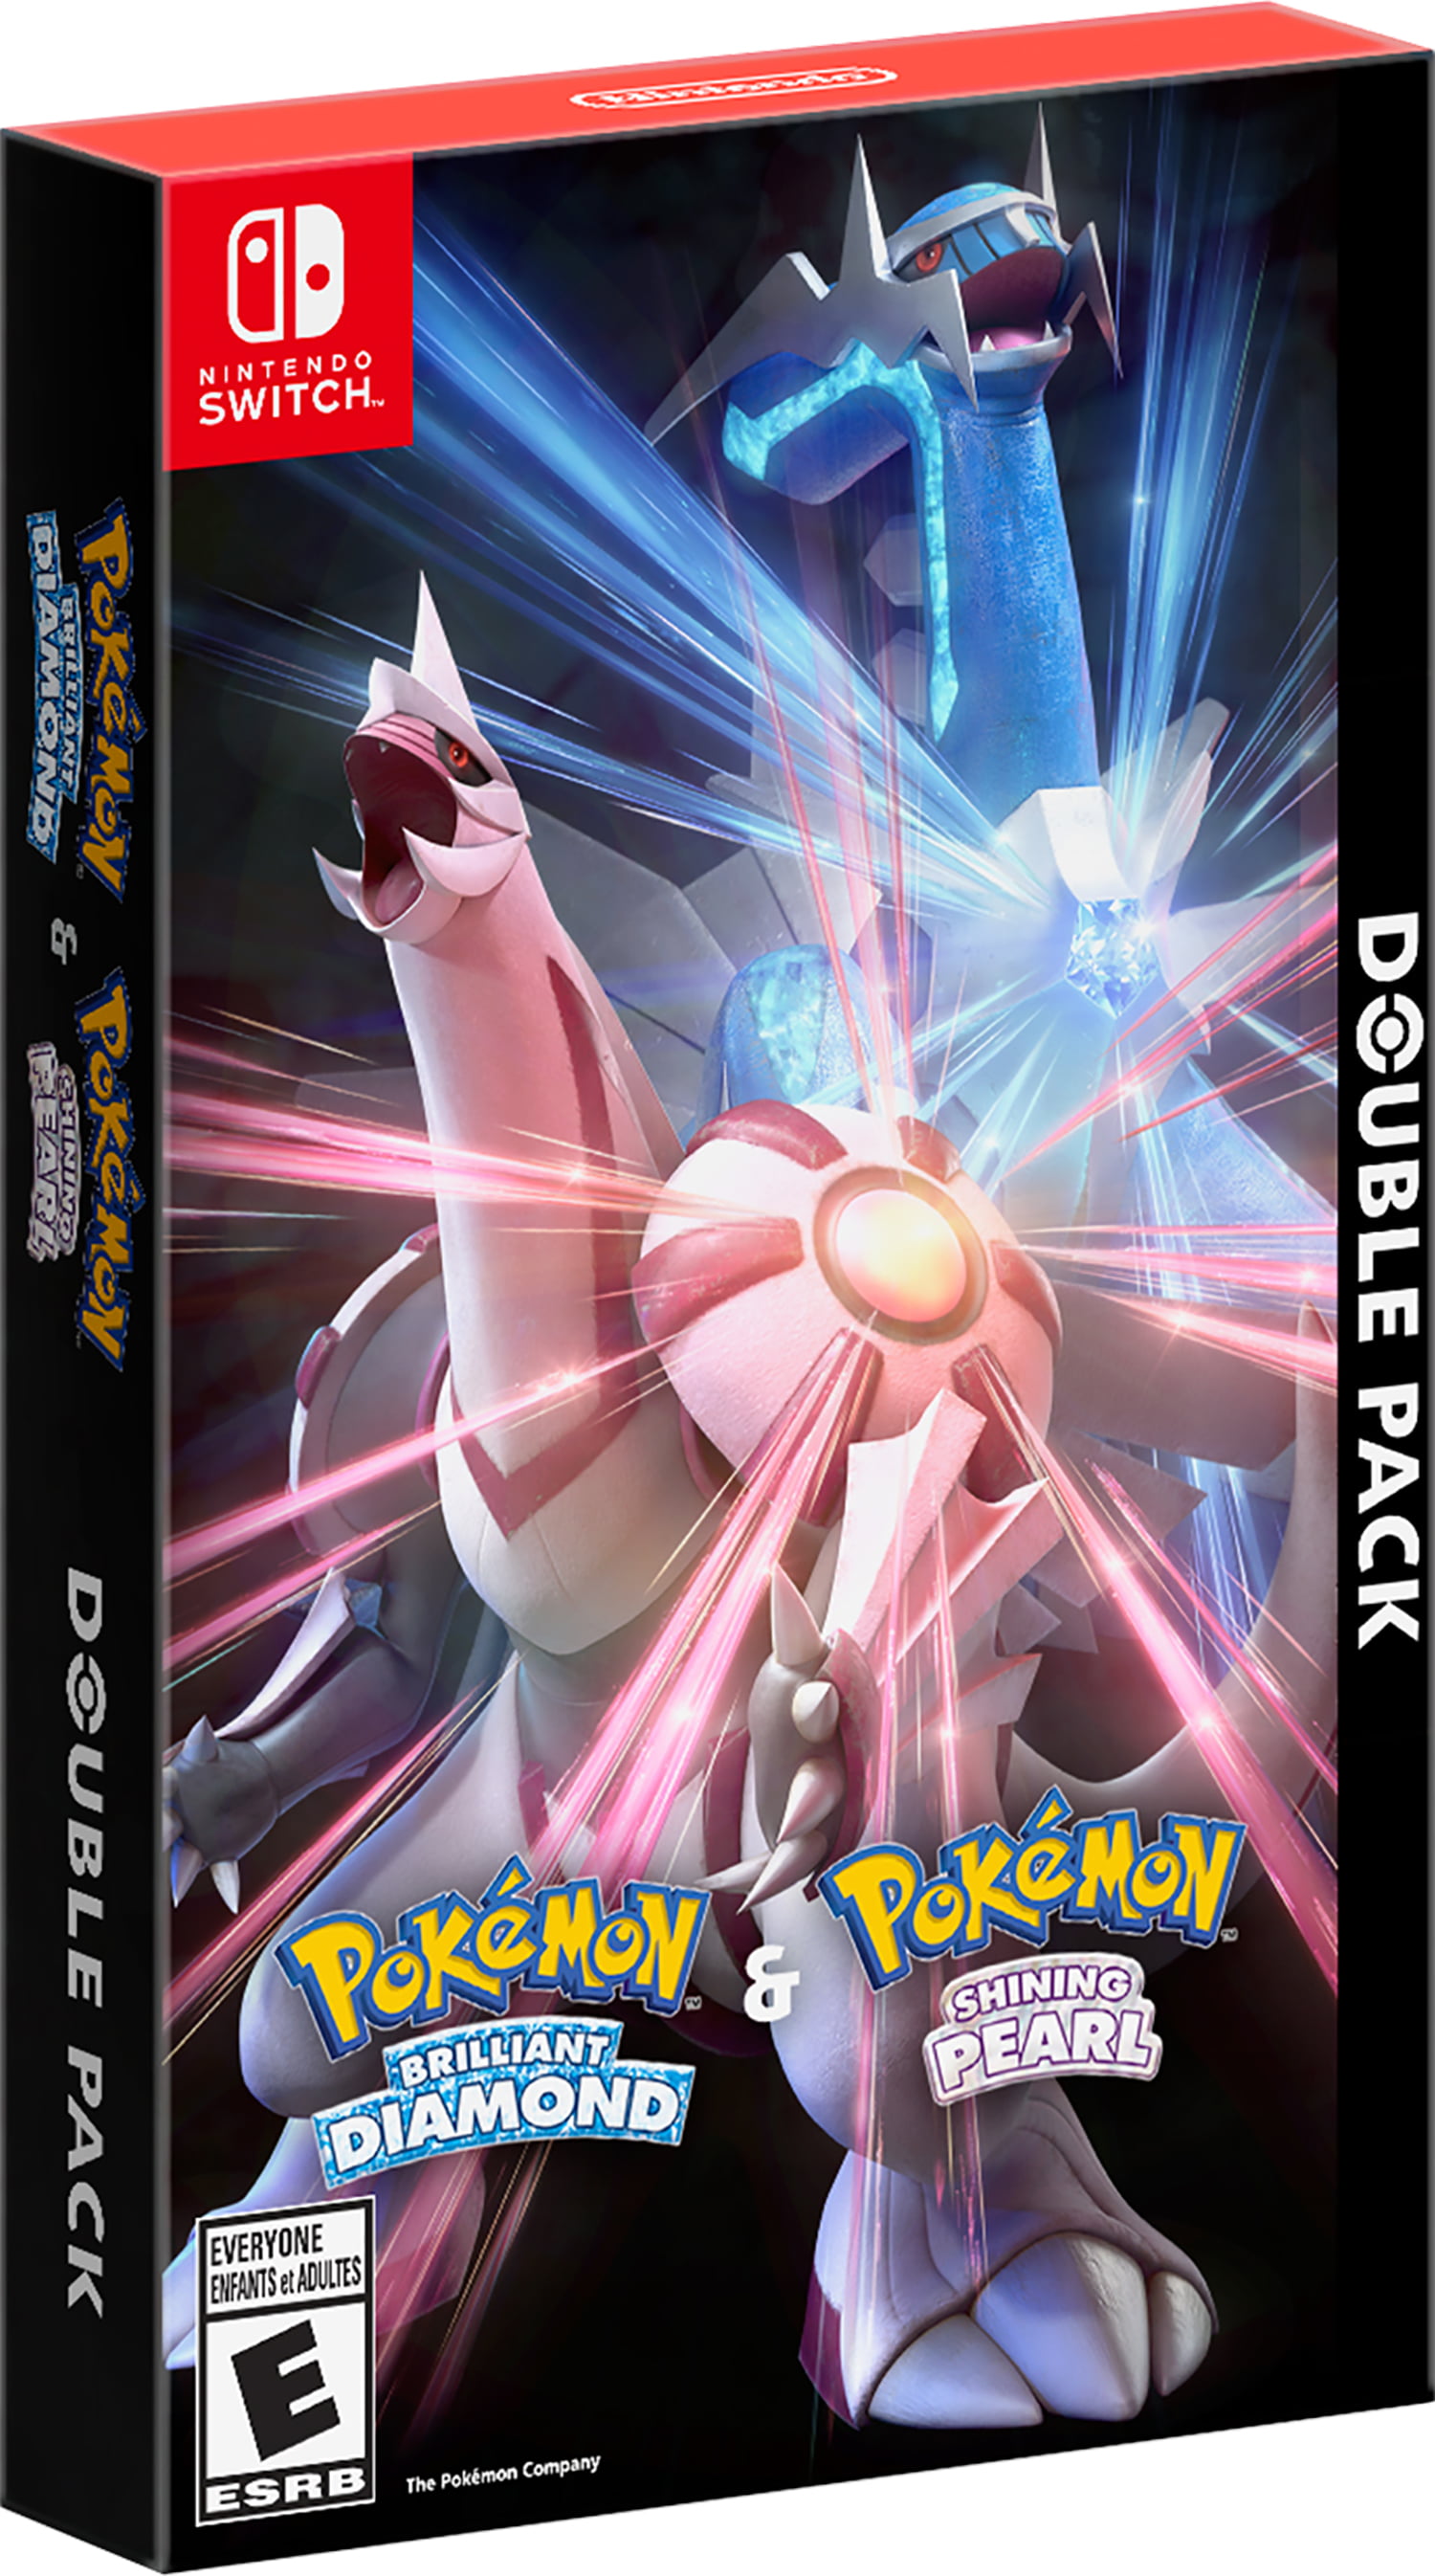 Pre-order Pokémon Diamond, Pearl Remake for Nintendo Switch